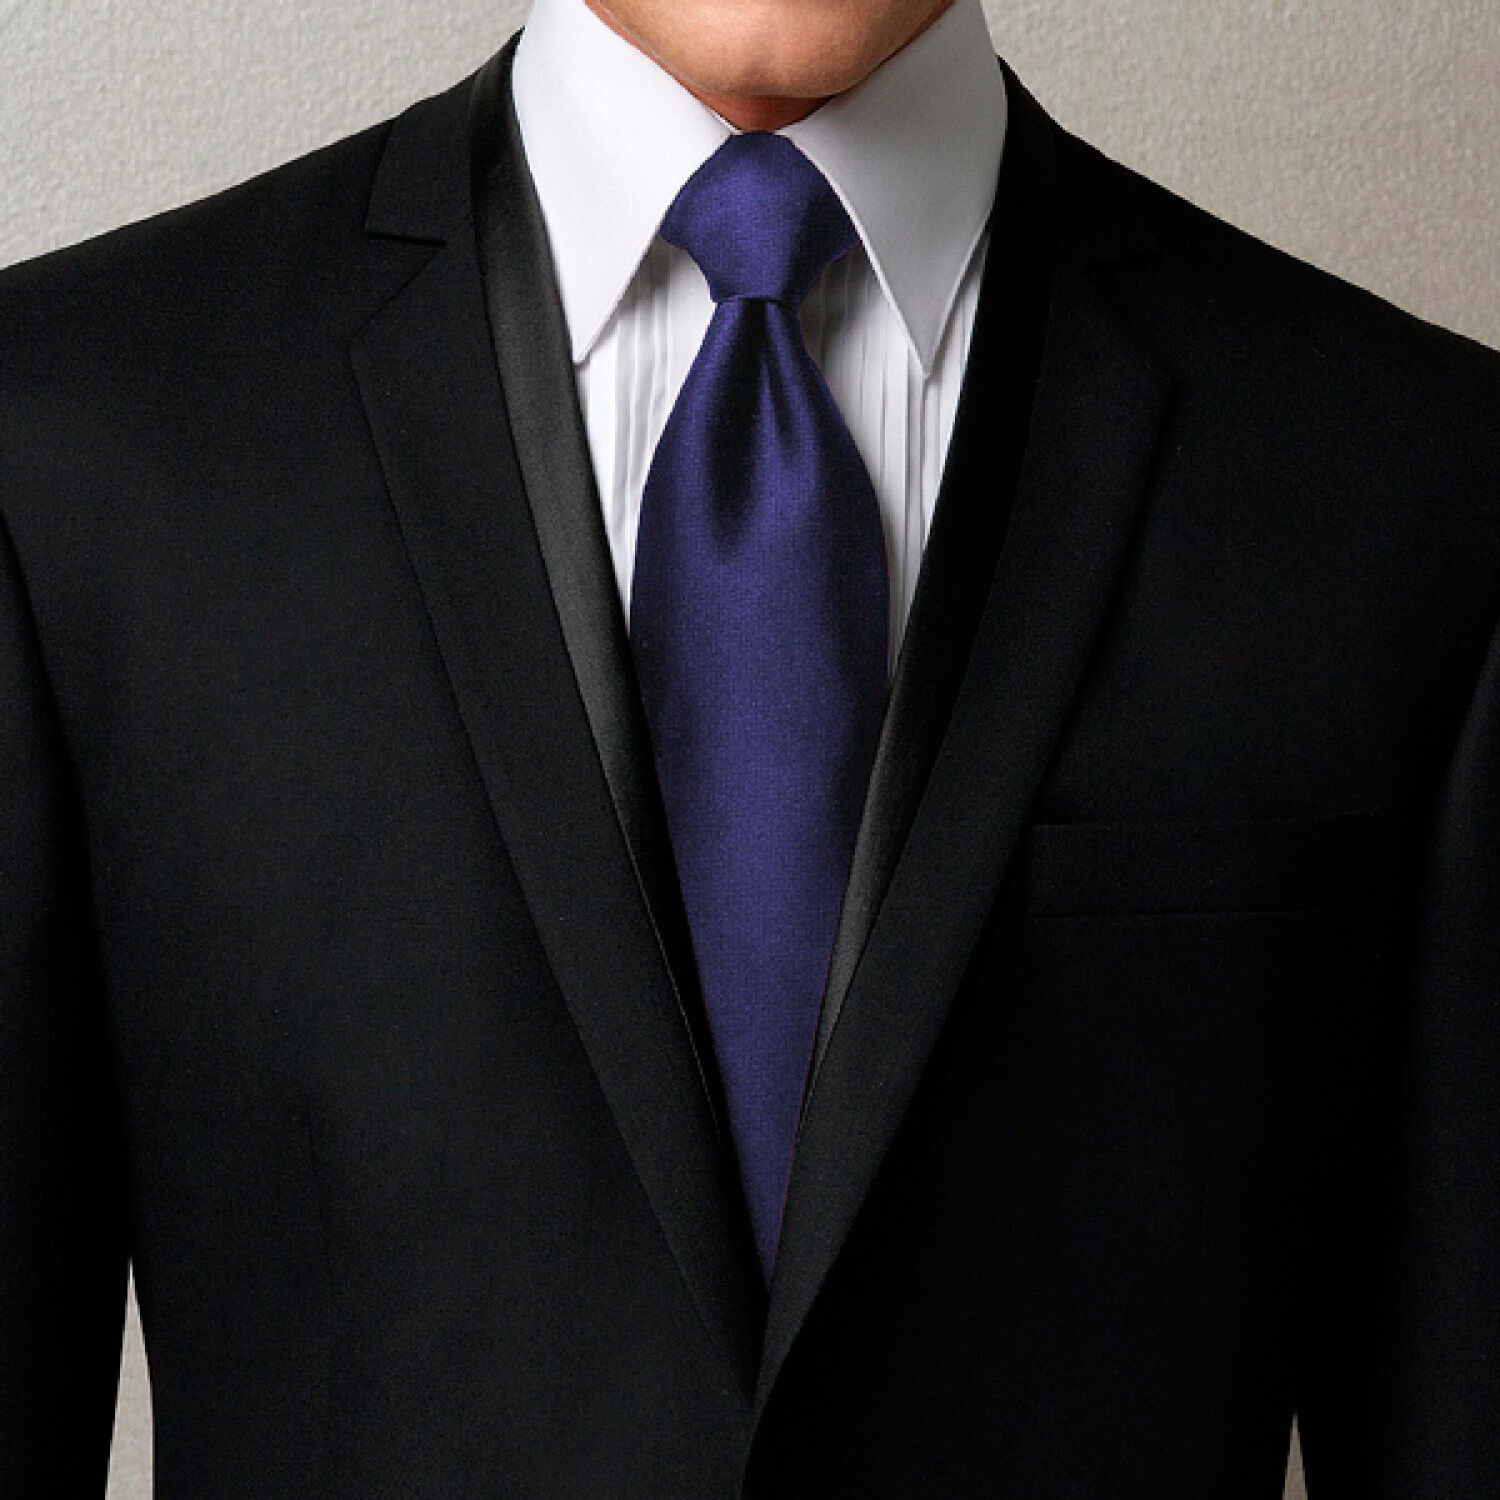 Синяя рубашка белый галстук